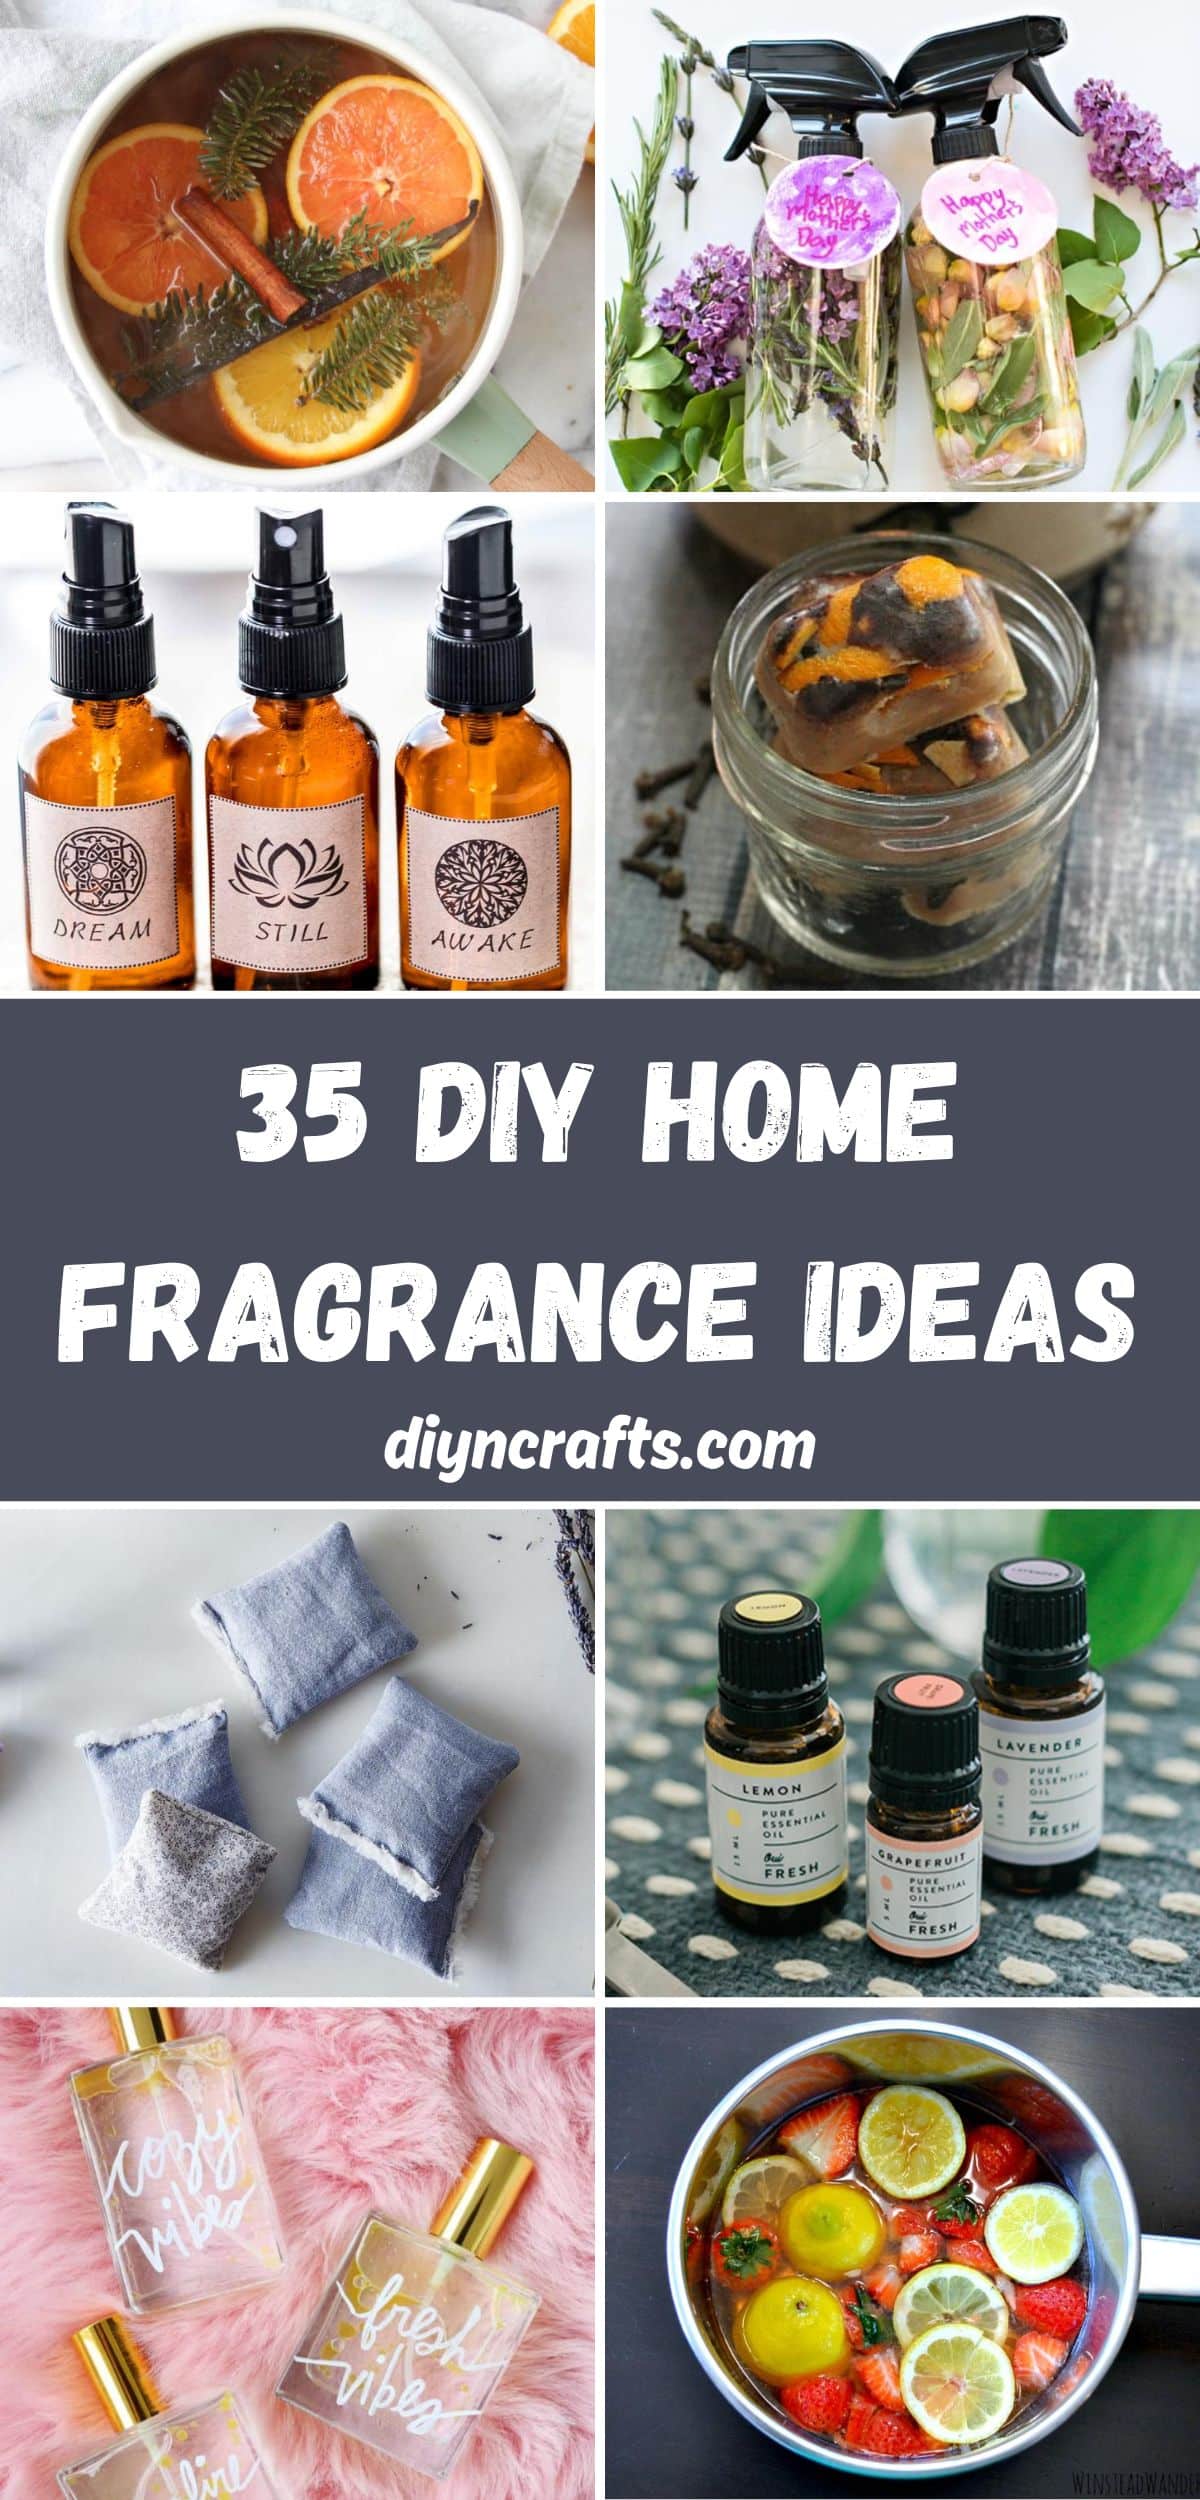 35 DIY Home Fragrance Ideas collage.